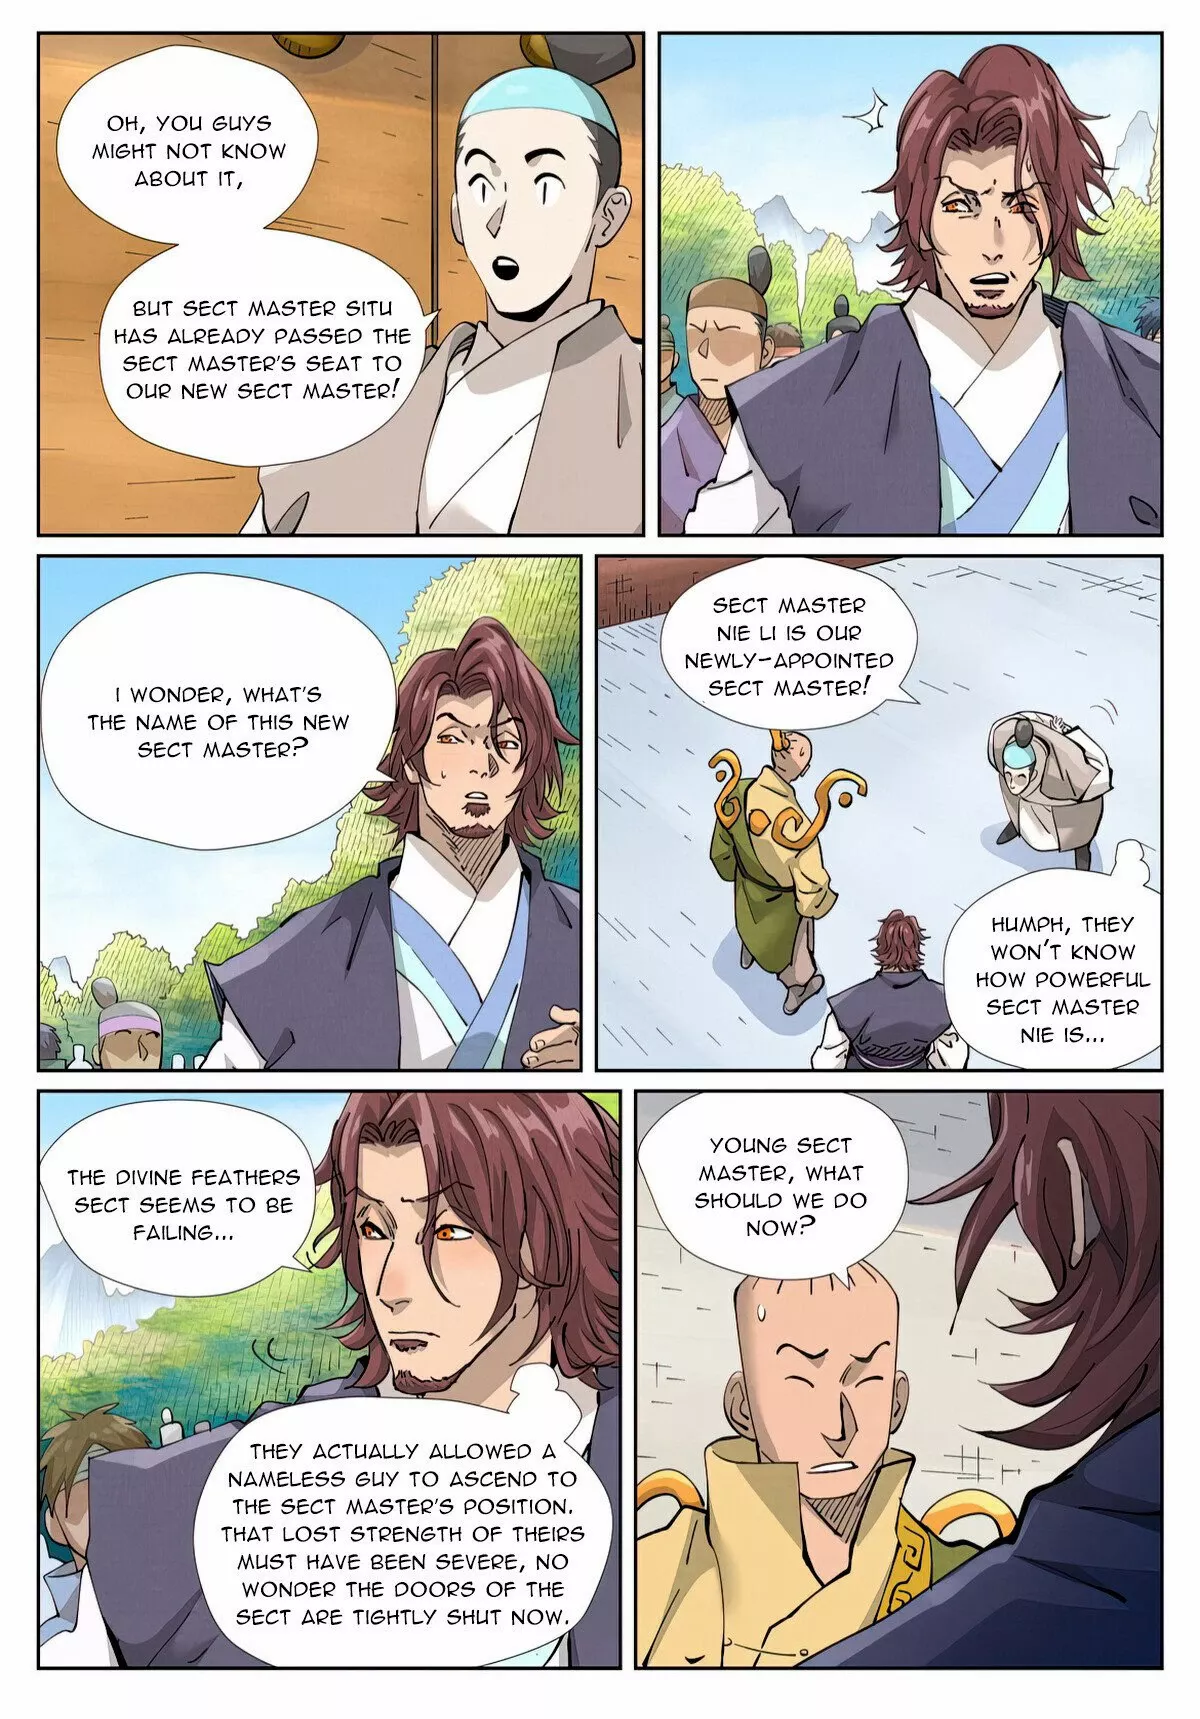 Tales Of Demons And Gods Chapter 429.6 page 7 - Mangakakalot